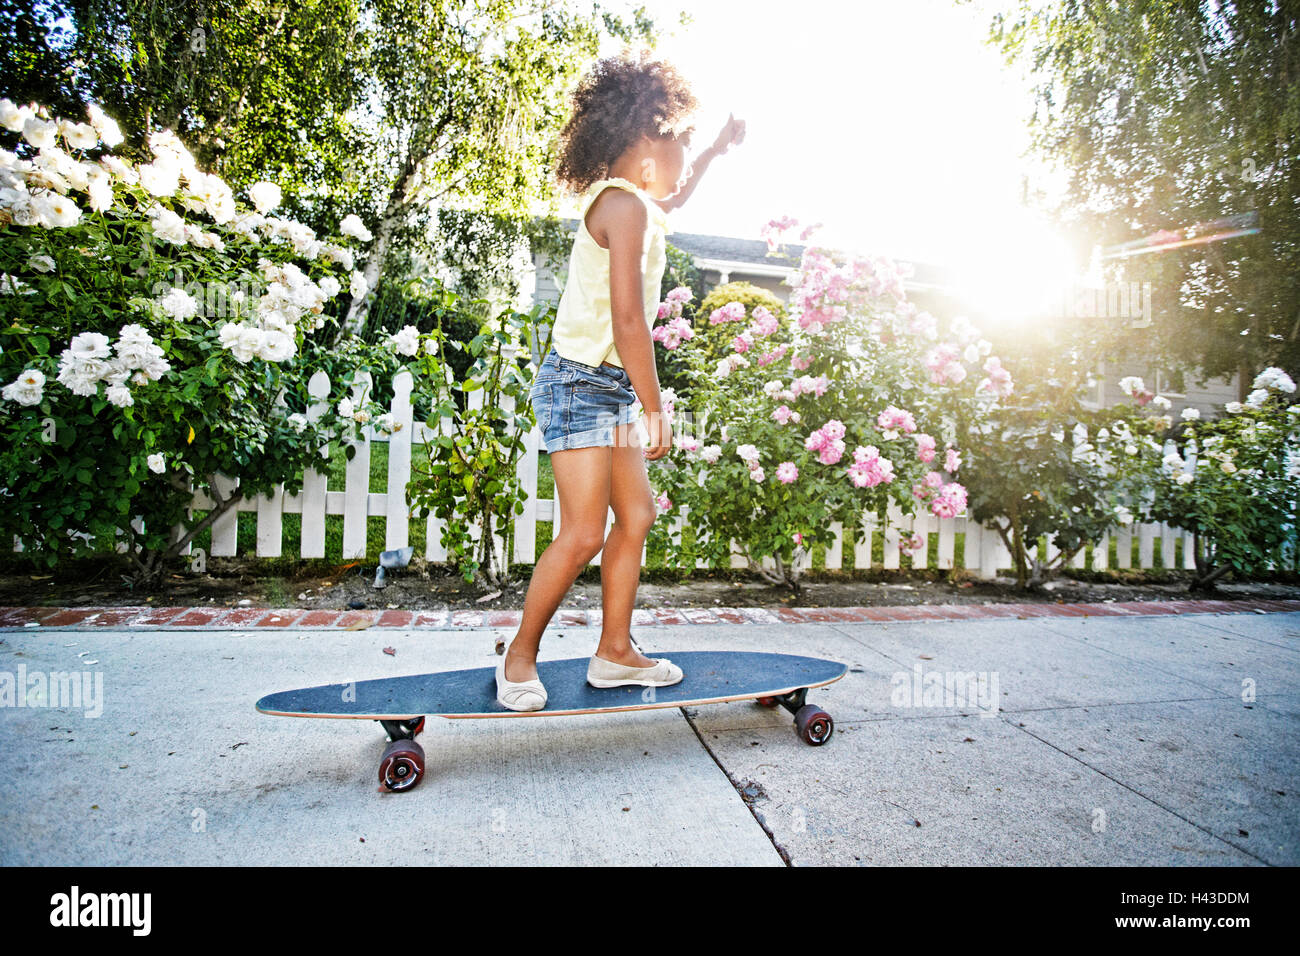 Mixed Race girl skateboarding on sidewalk Stock Photo - Alamy